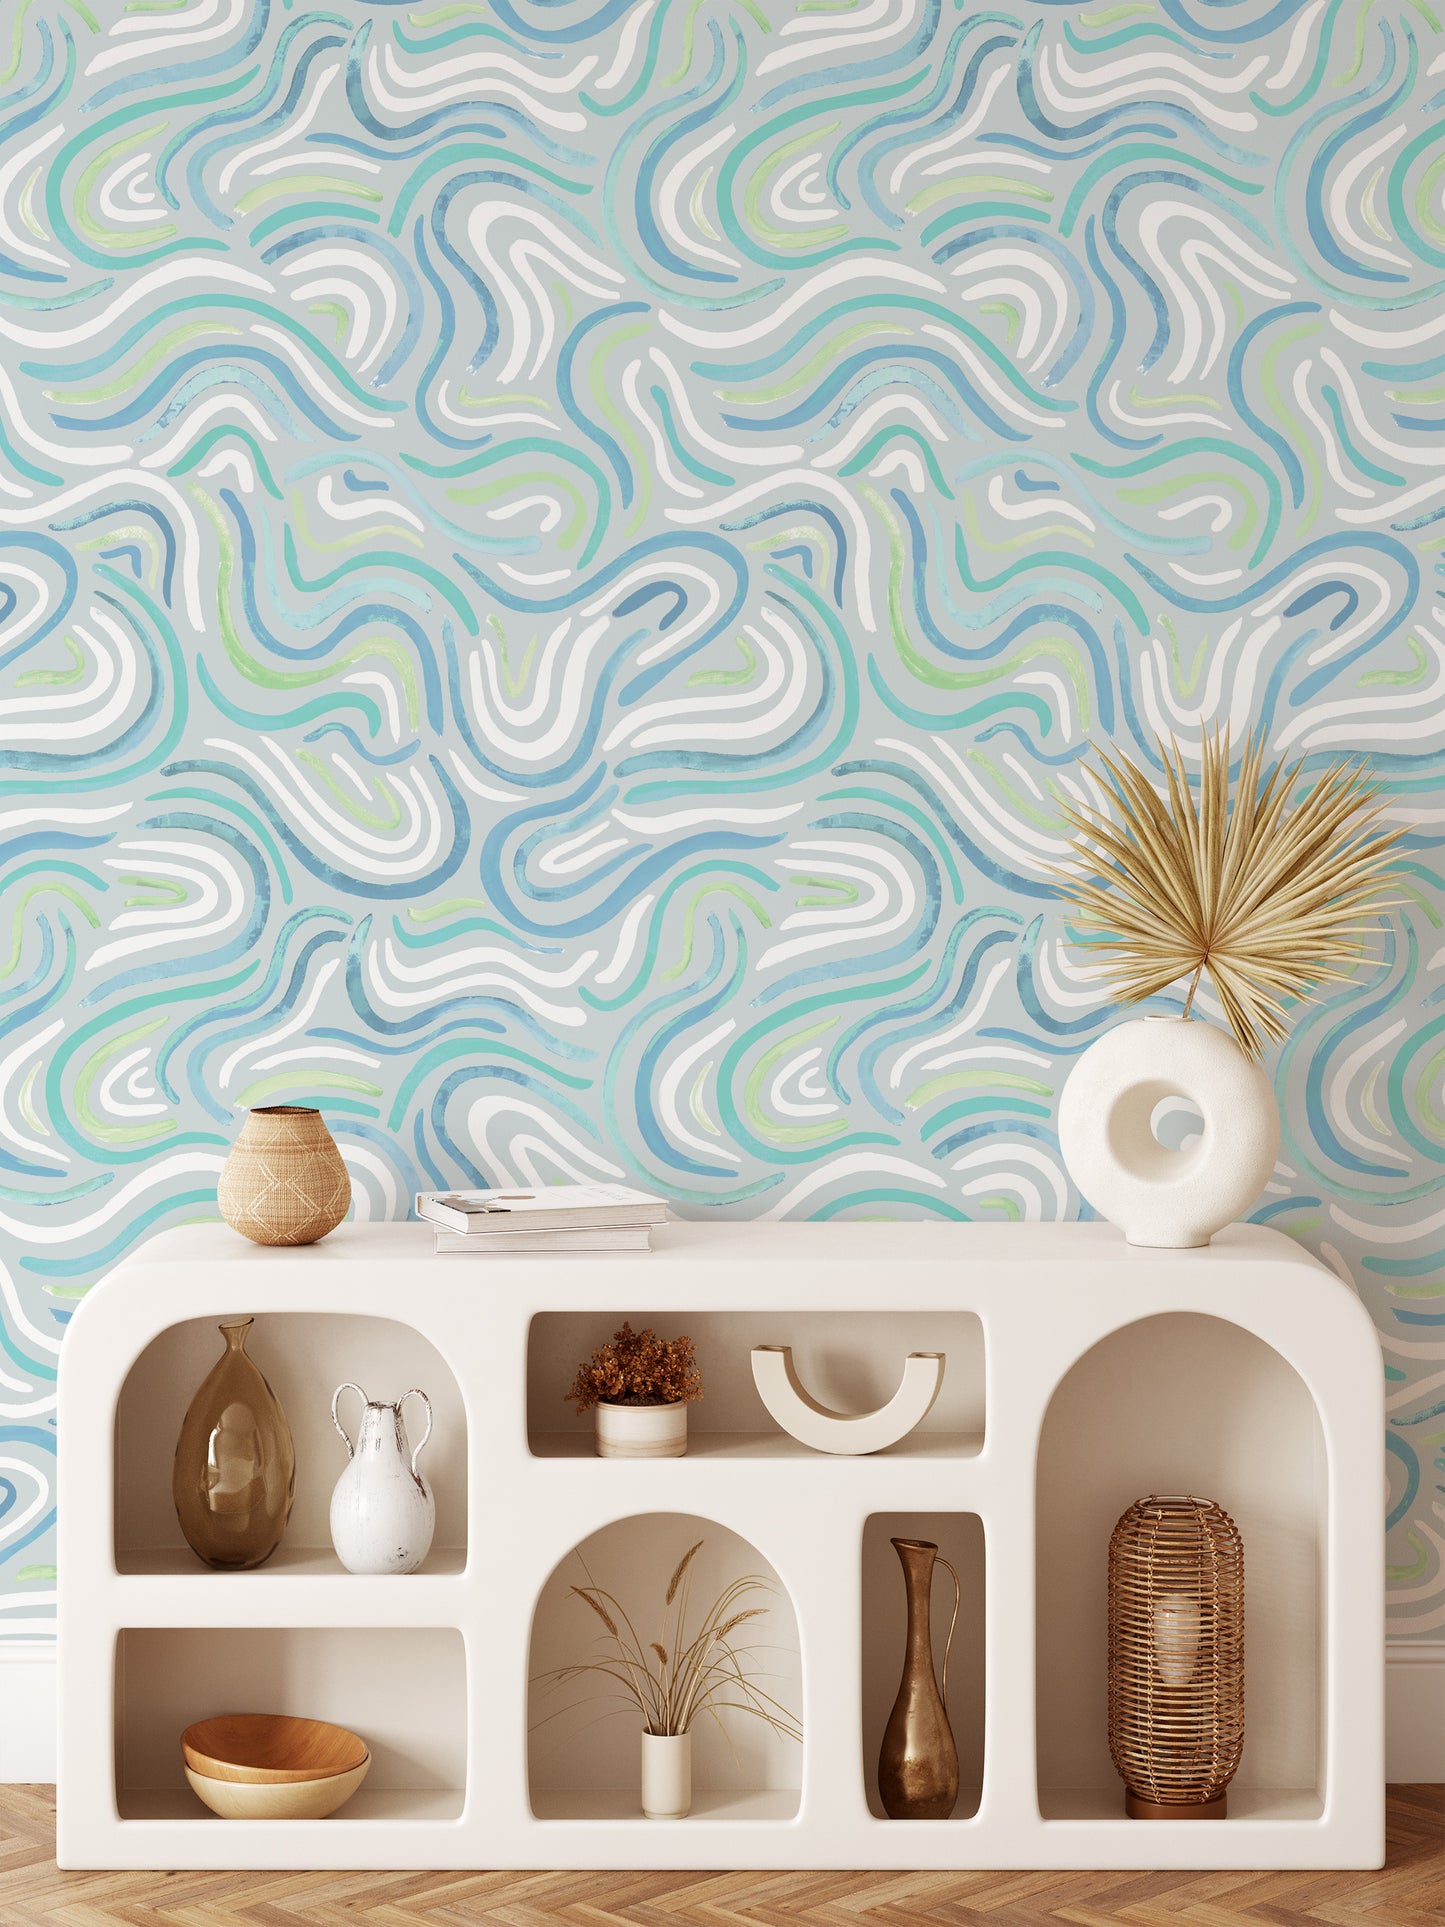 Bedroom featuring Iris + Sea Modern Rainbow- Turquoise Peel and Stick Wallpaper - a modern pattern